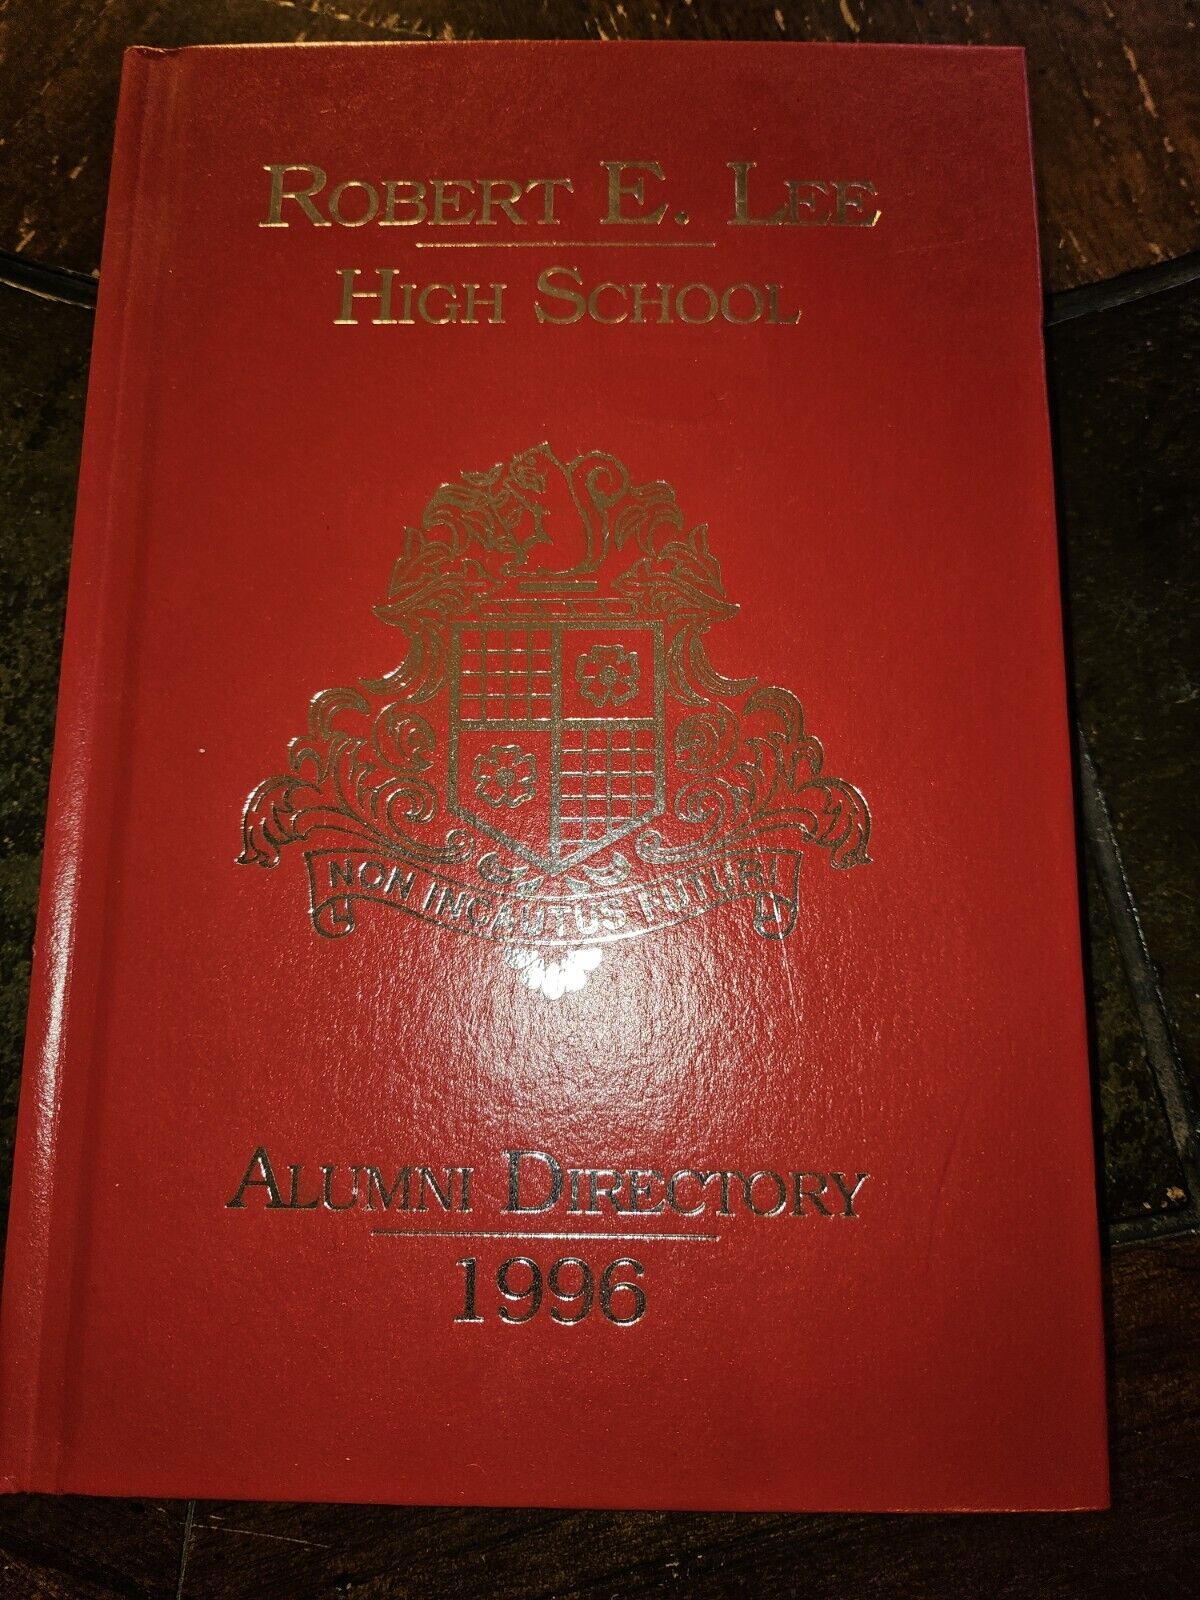 Robert E. Lee High School Alumni Directory 1996